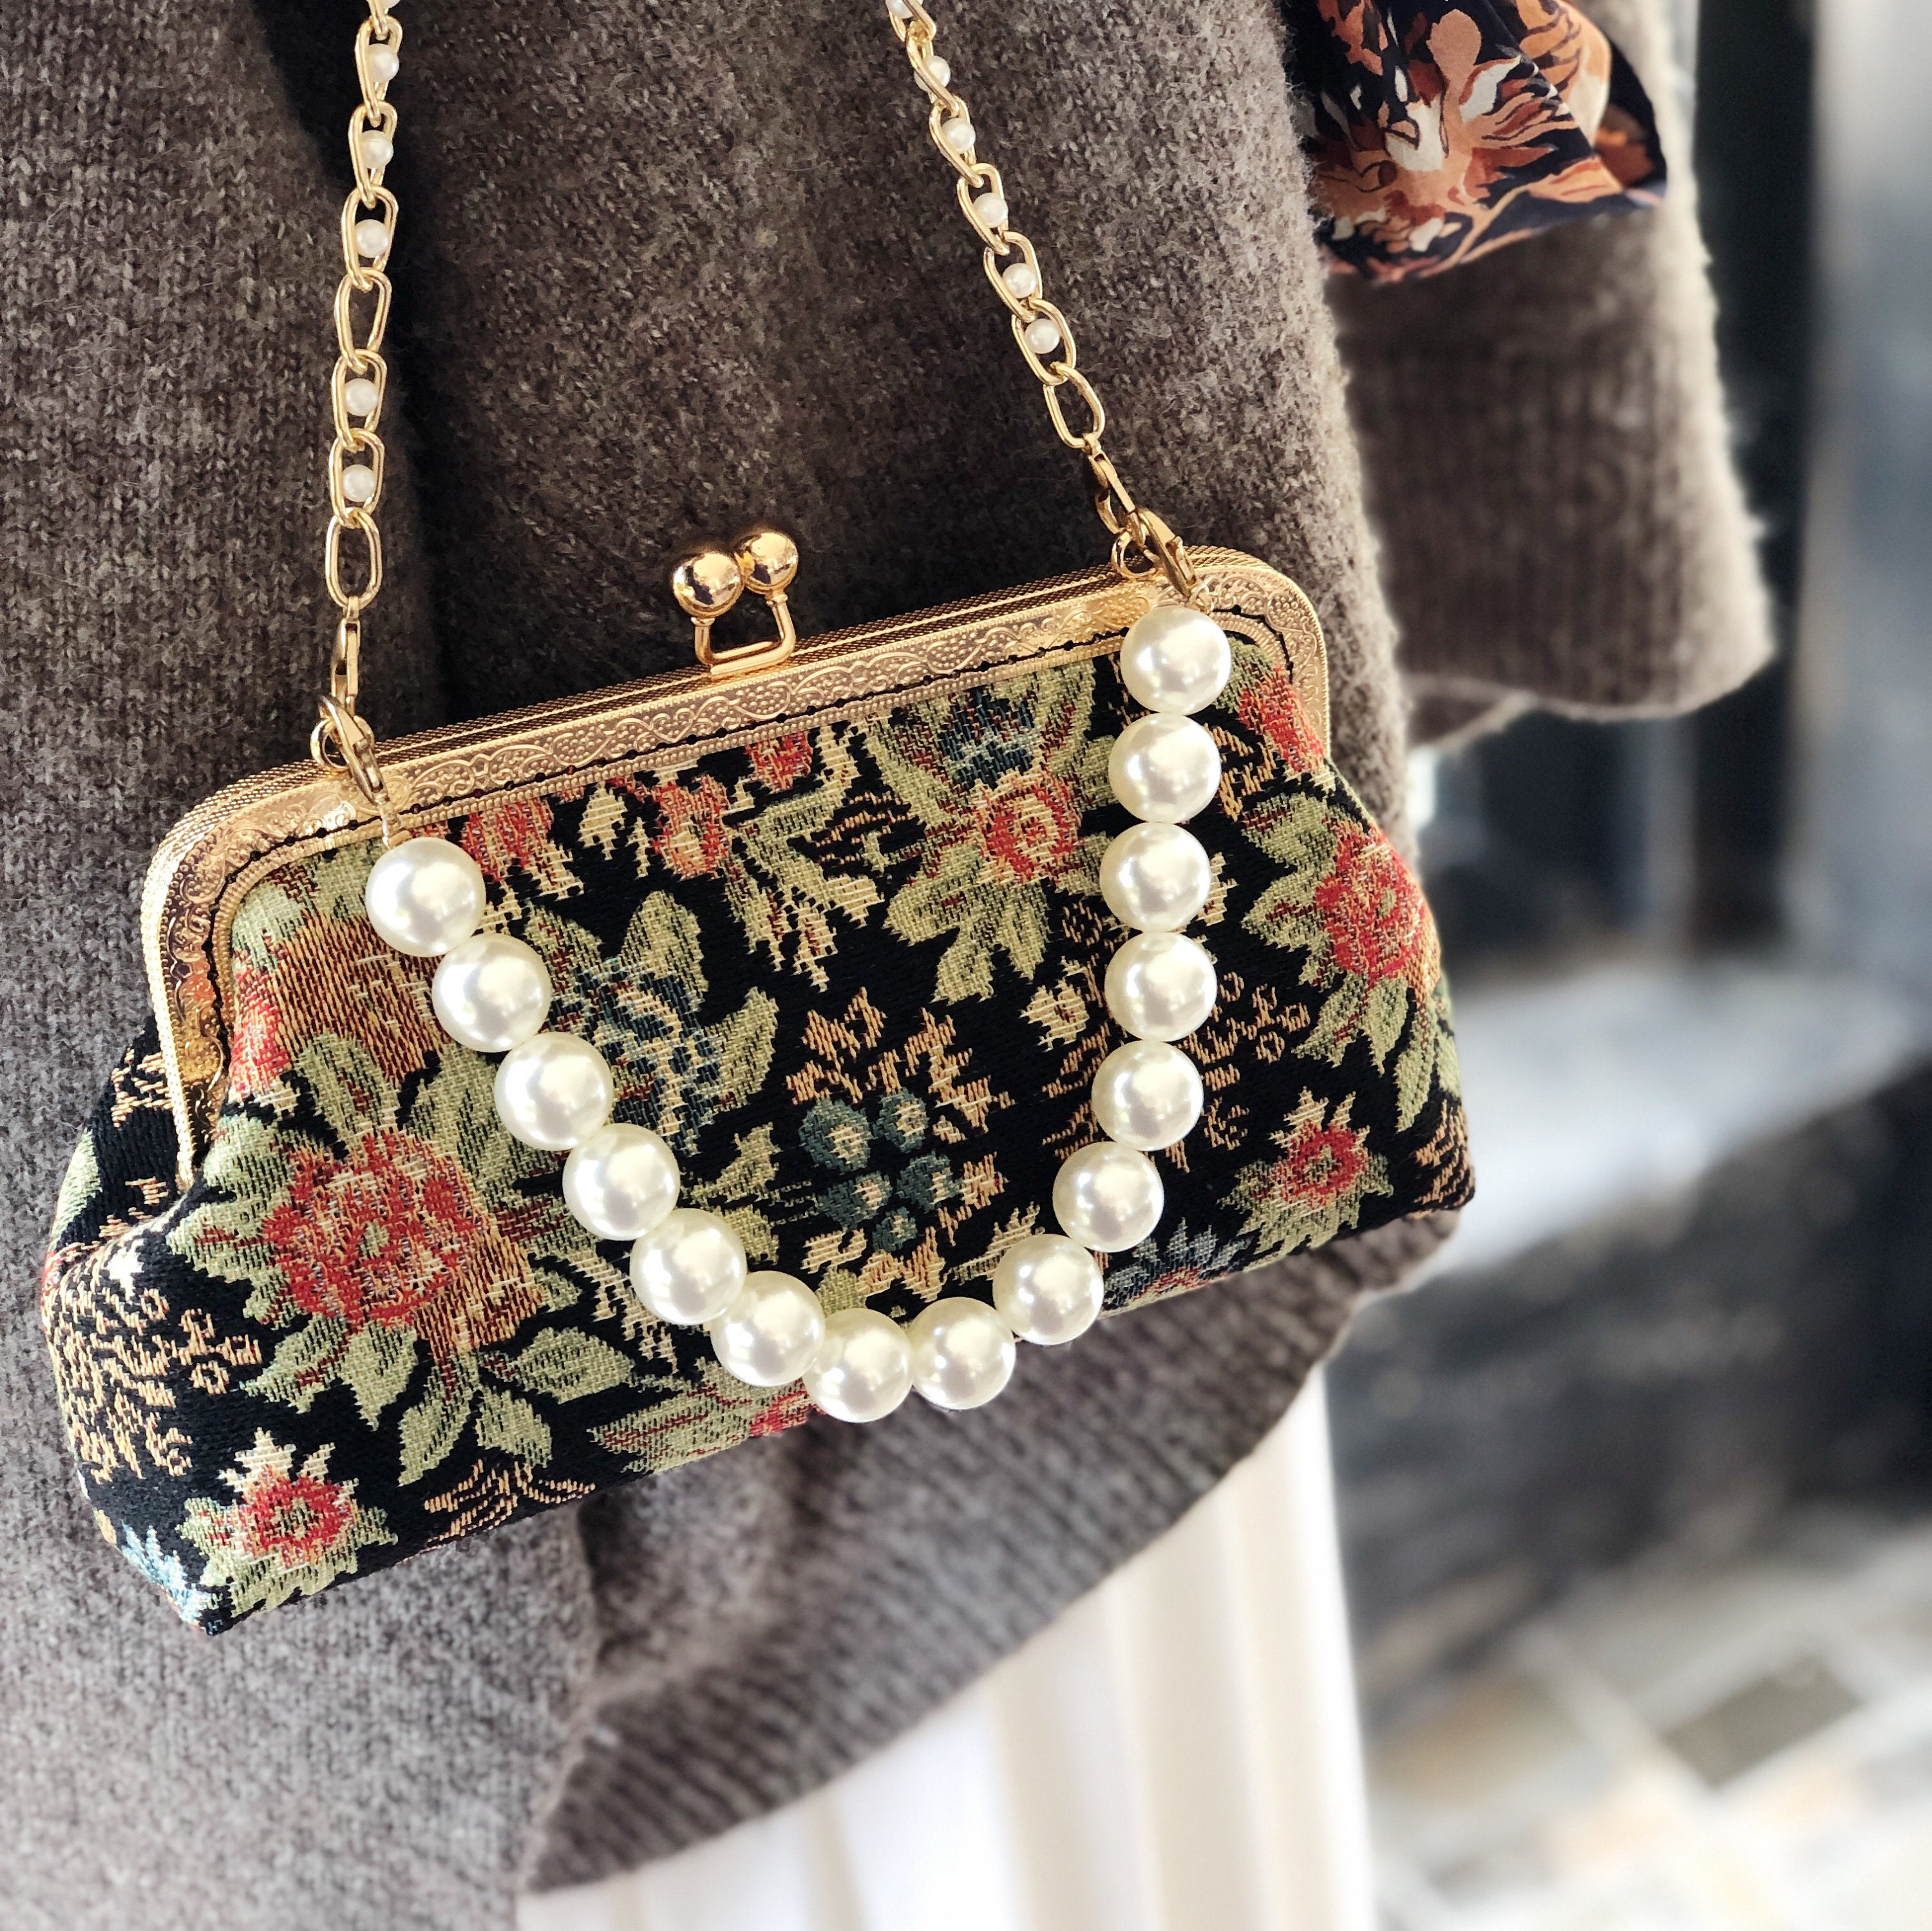 Vintage Style Cheongsam Kiss Lock Handbag With Flora Pattern | Etsy